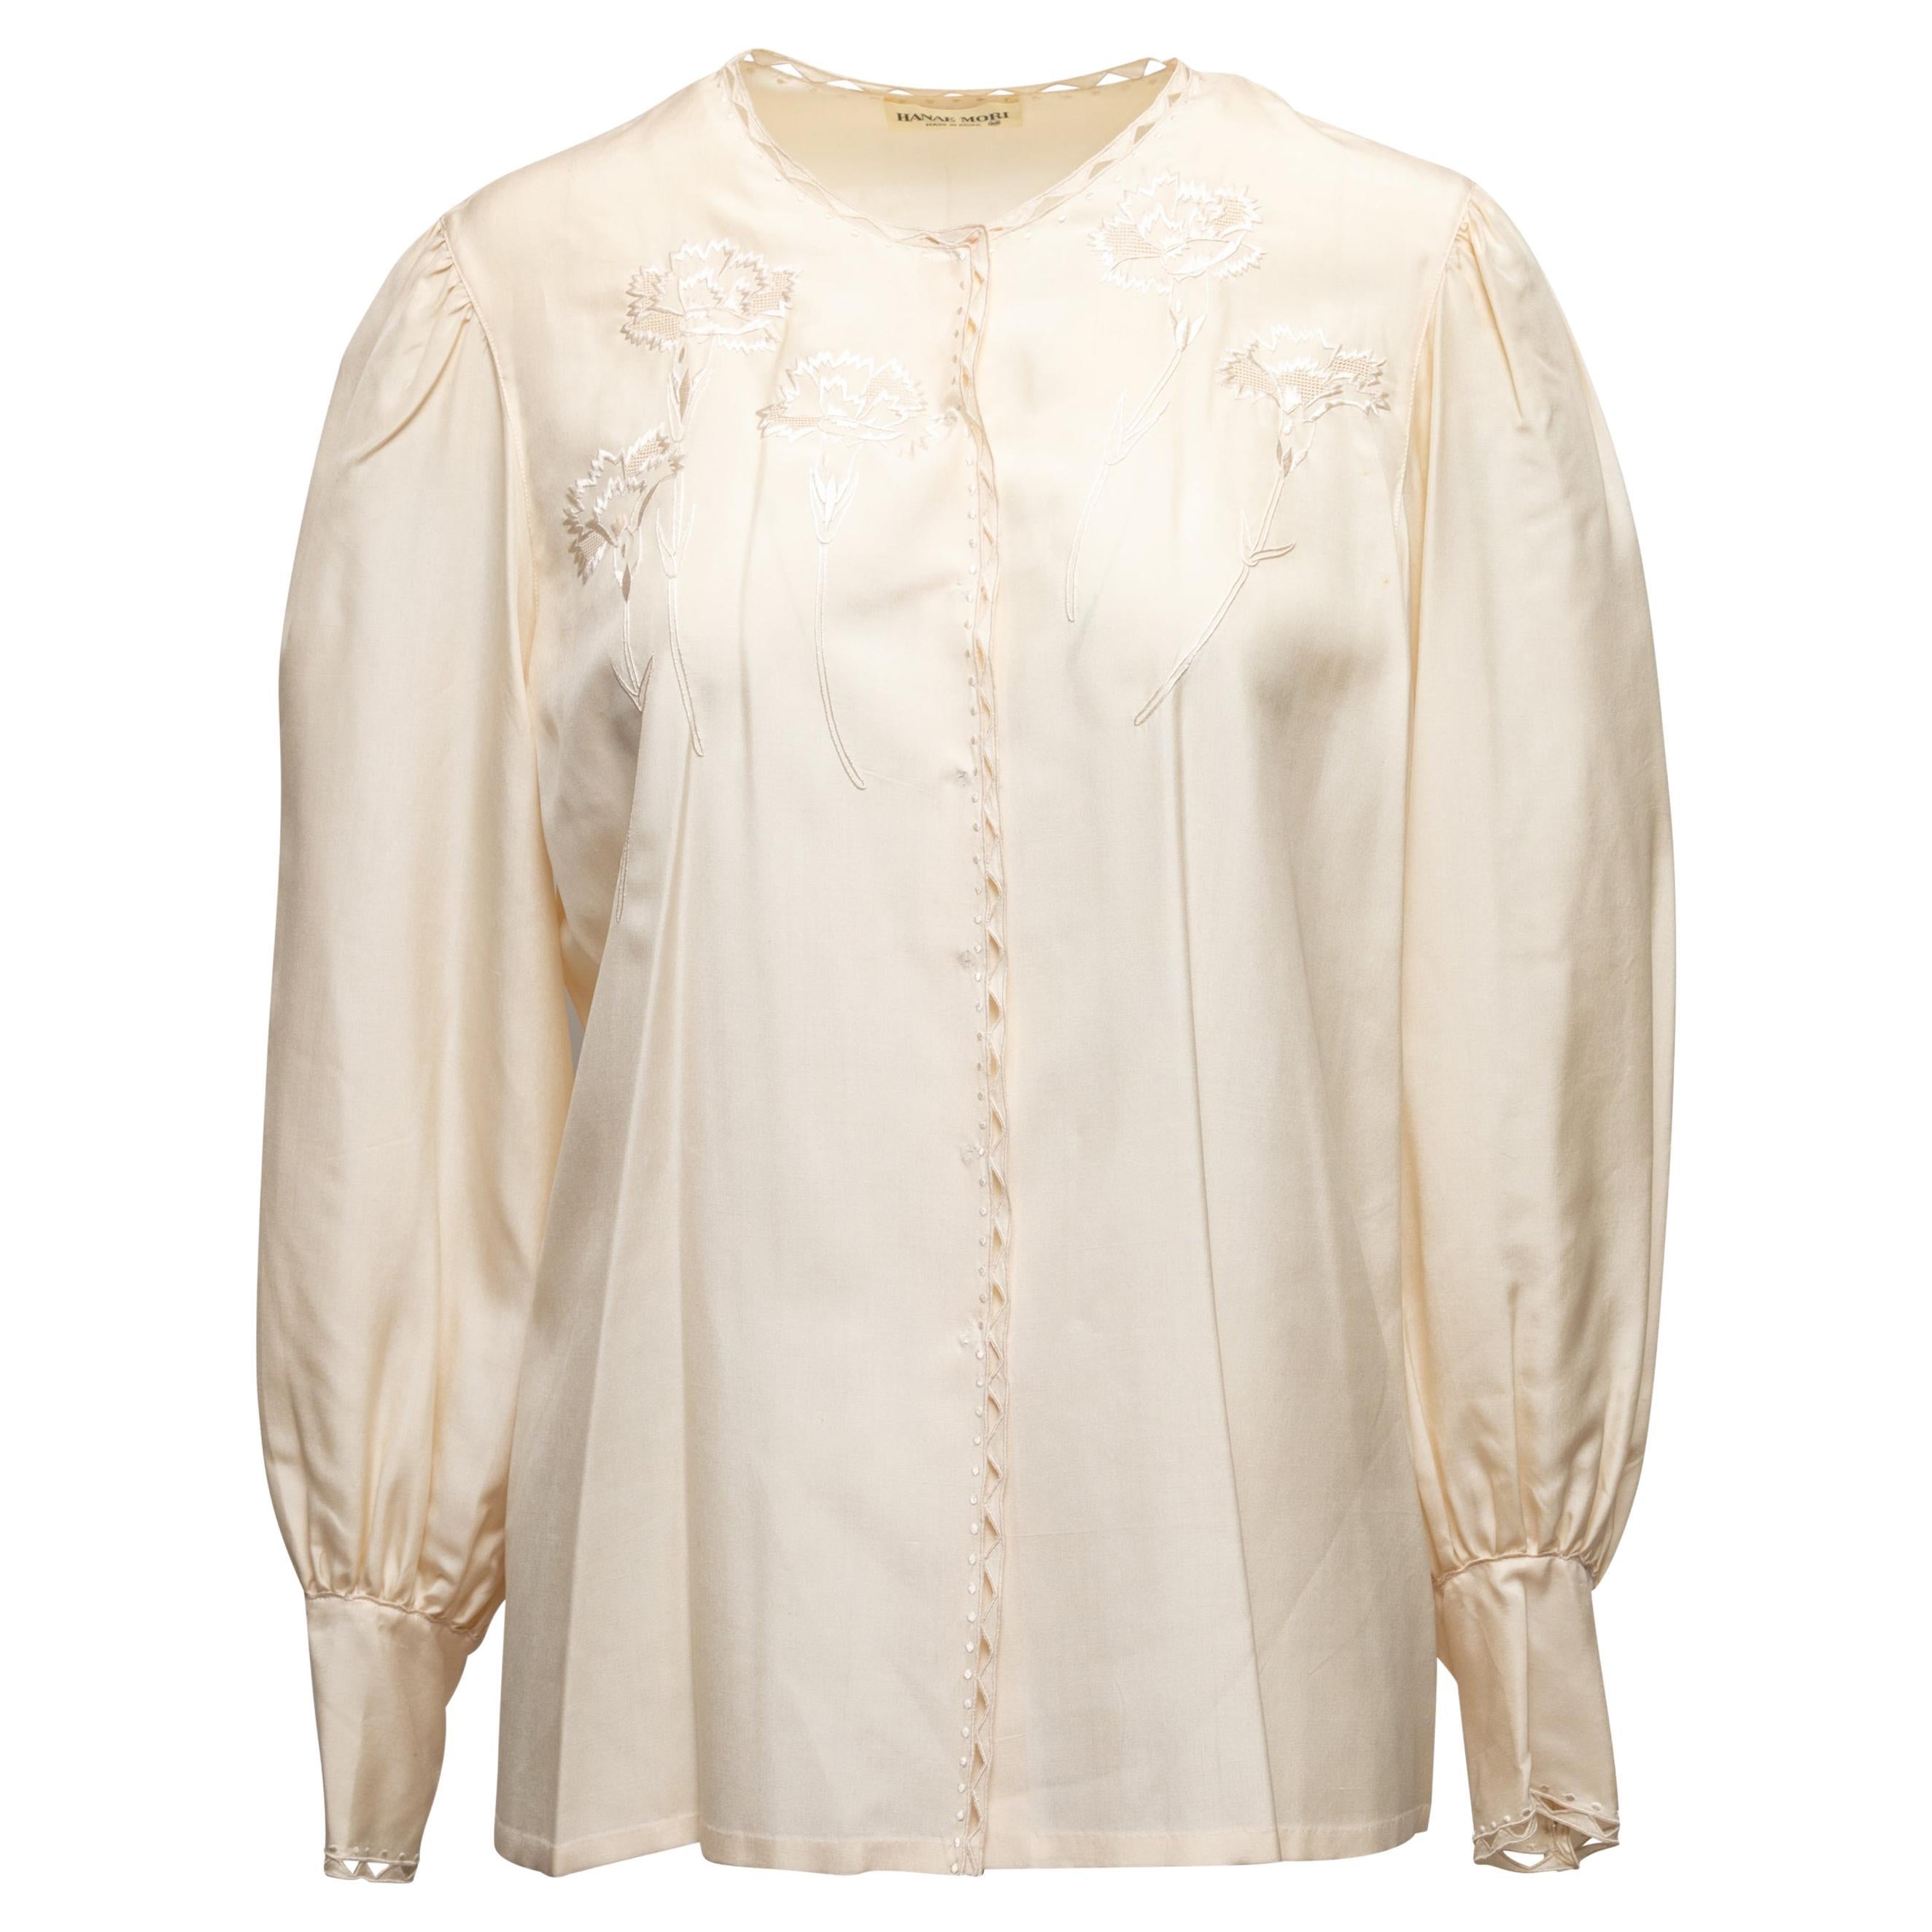 Vintage Cream Hanae Mori Silk Embroidered Blouse Size US M